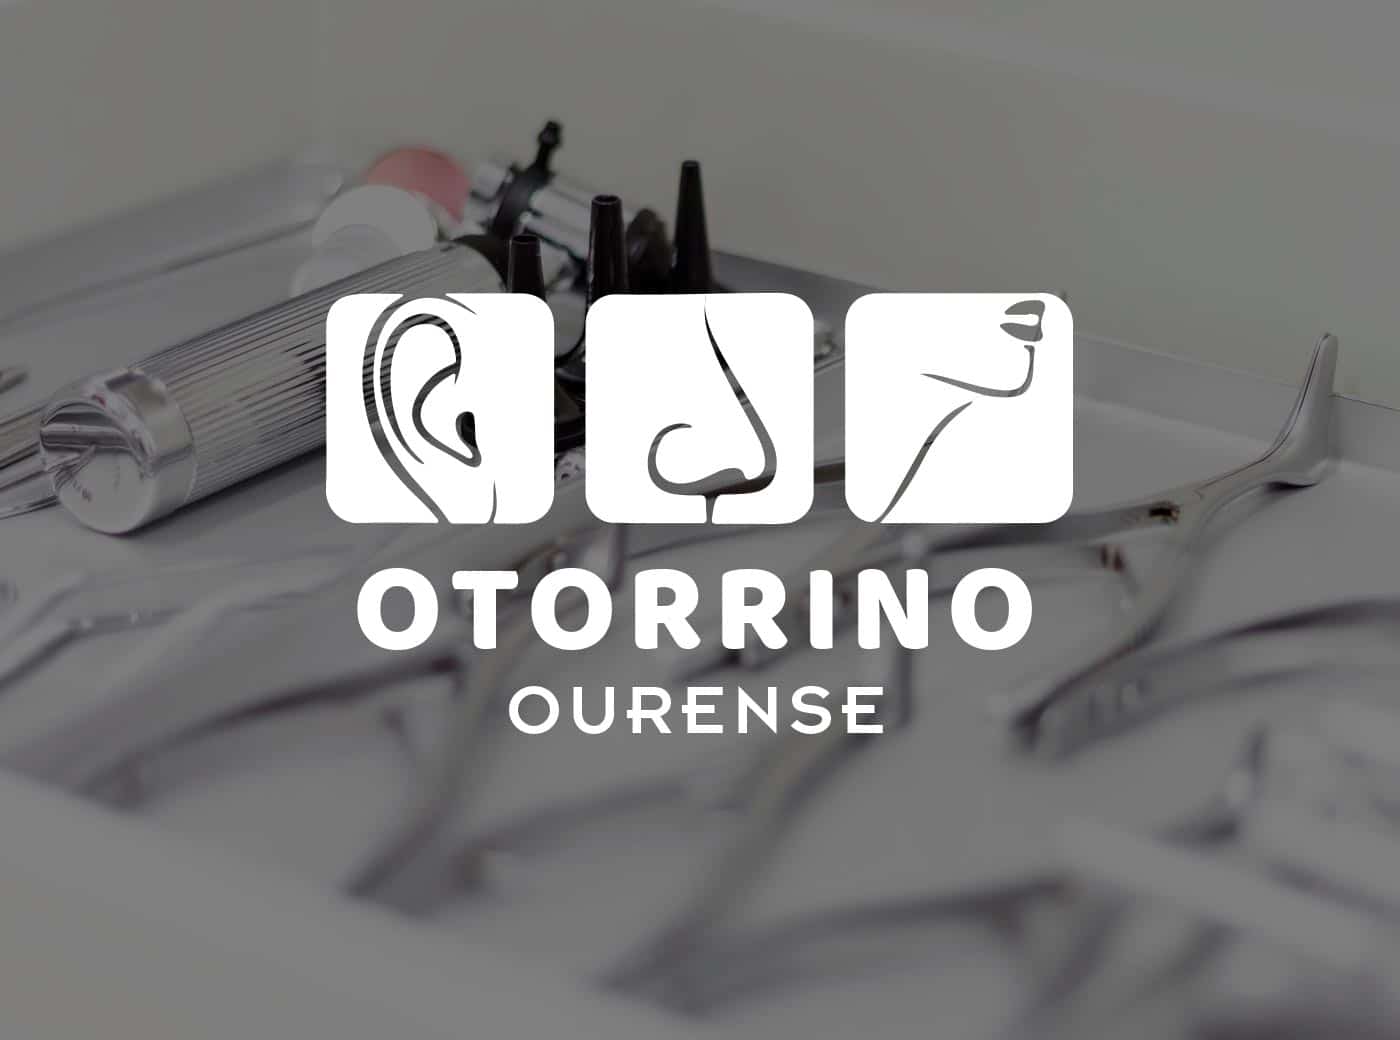 otorrinos ourense diseno web - inova3 - Marketing digital desde ourense